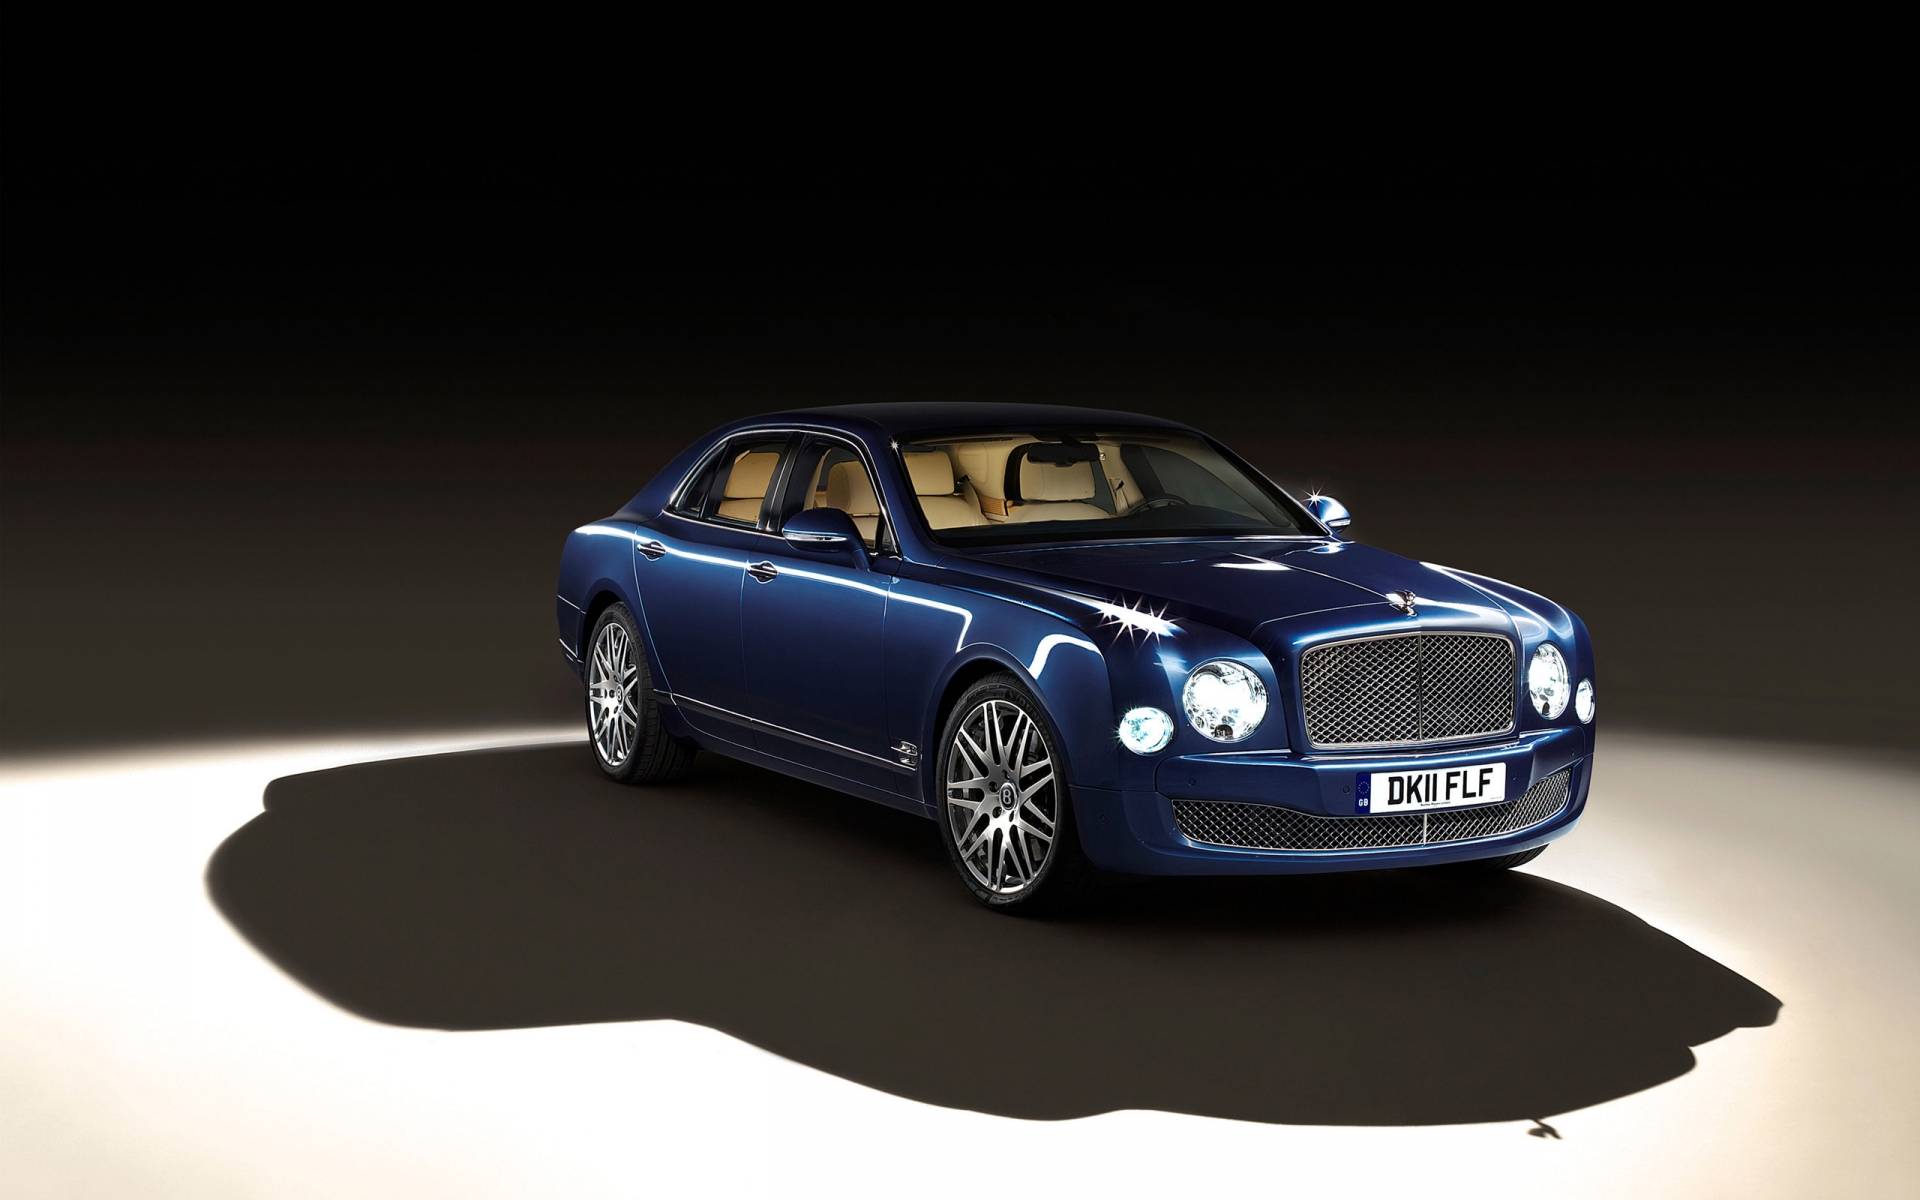 2012 Bentley Mulsanne Executive for 1920 x 1200 widescreen resolution